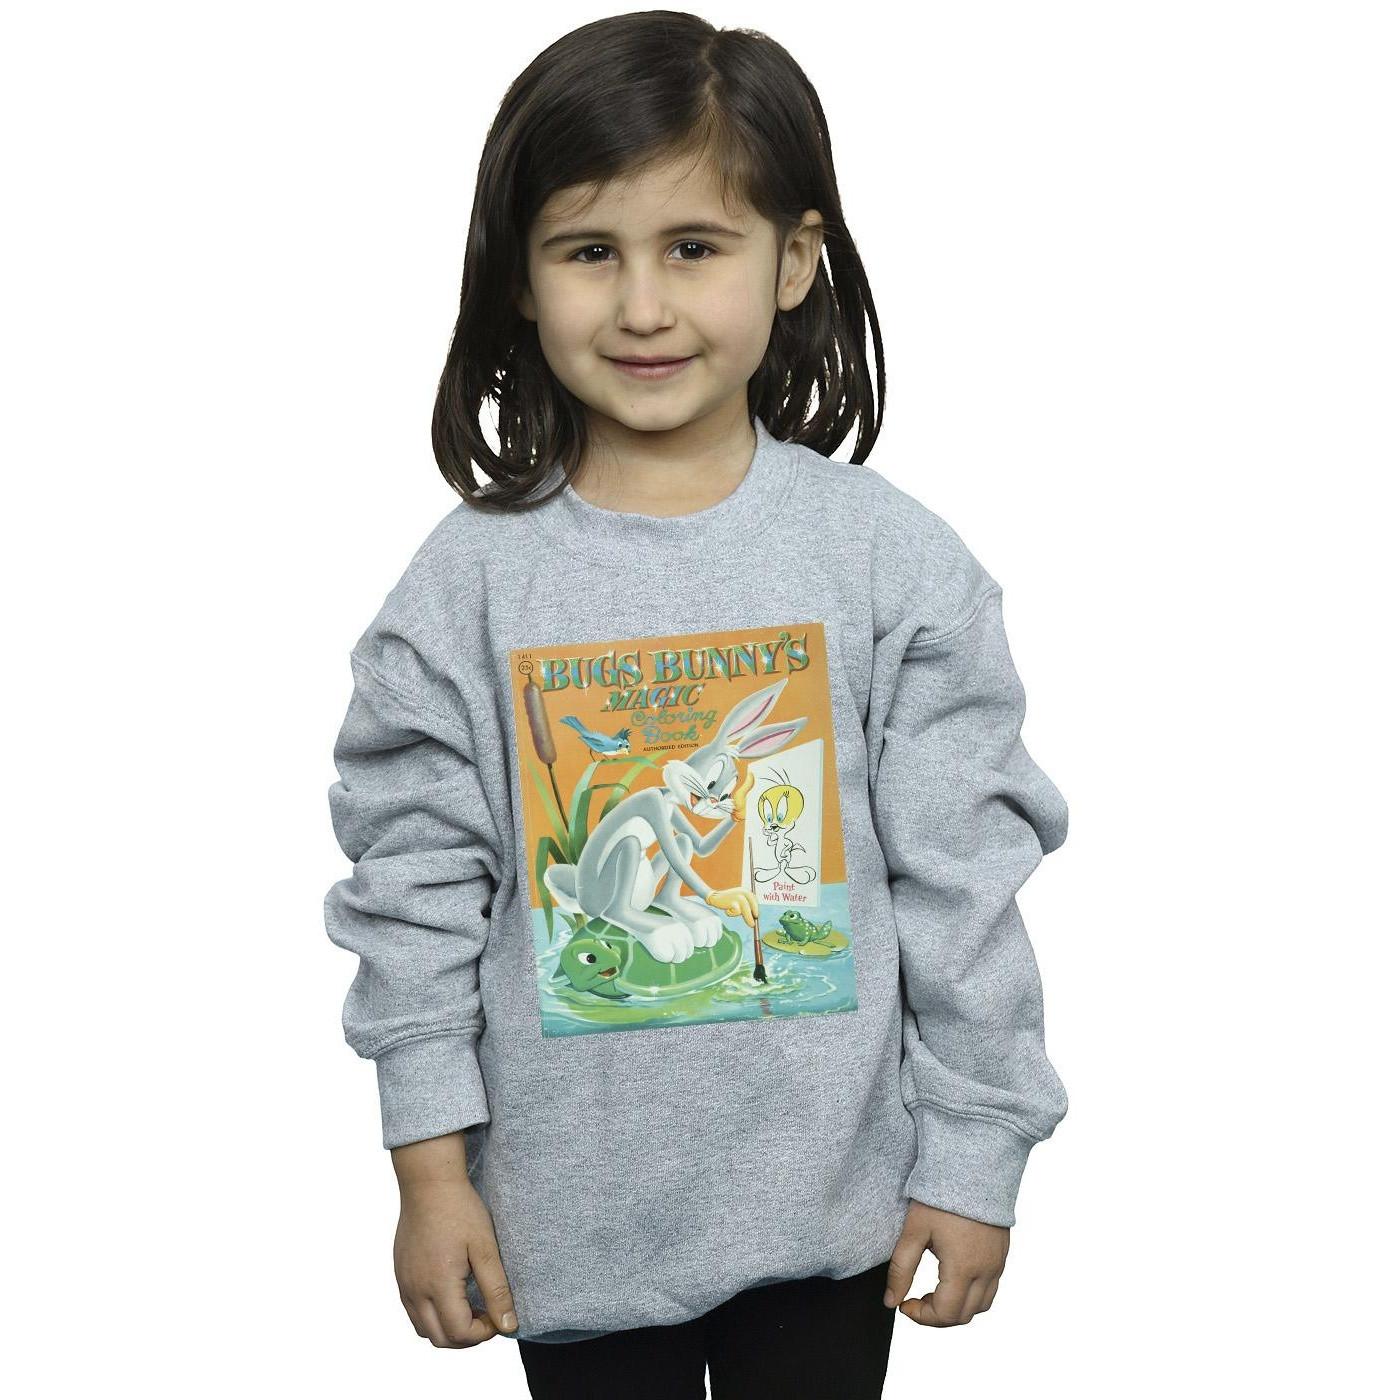 LOONEY TUNES  Bugs Bunny Colouring Book Sweatshirt 